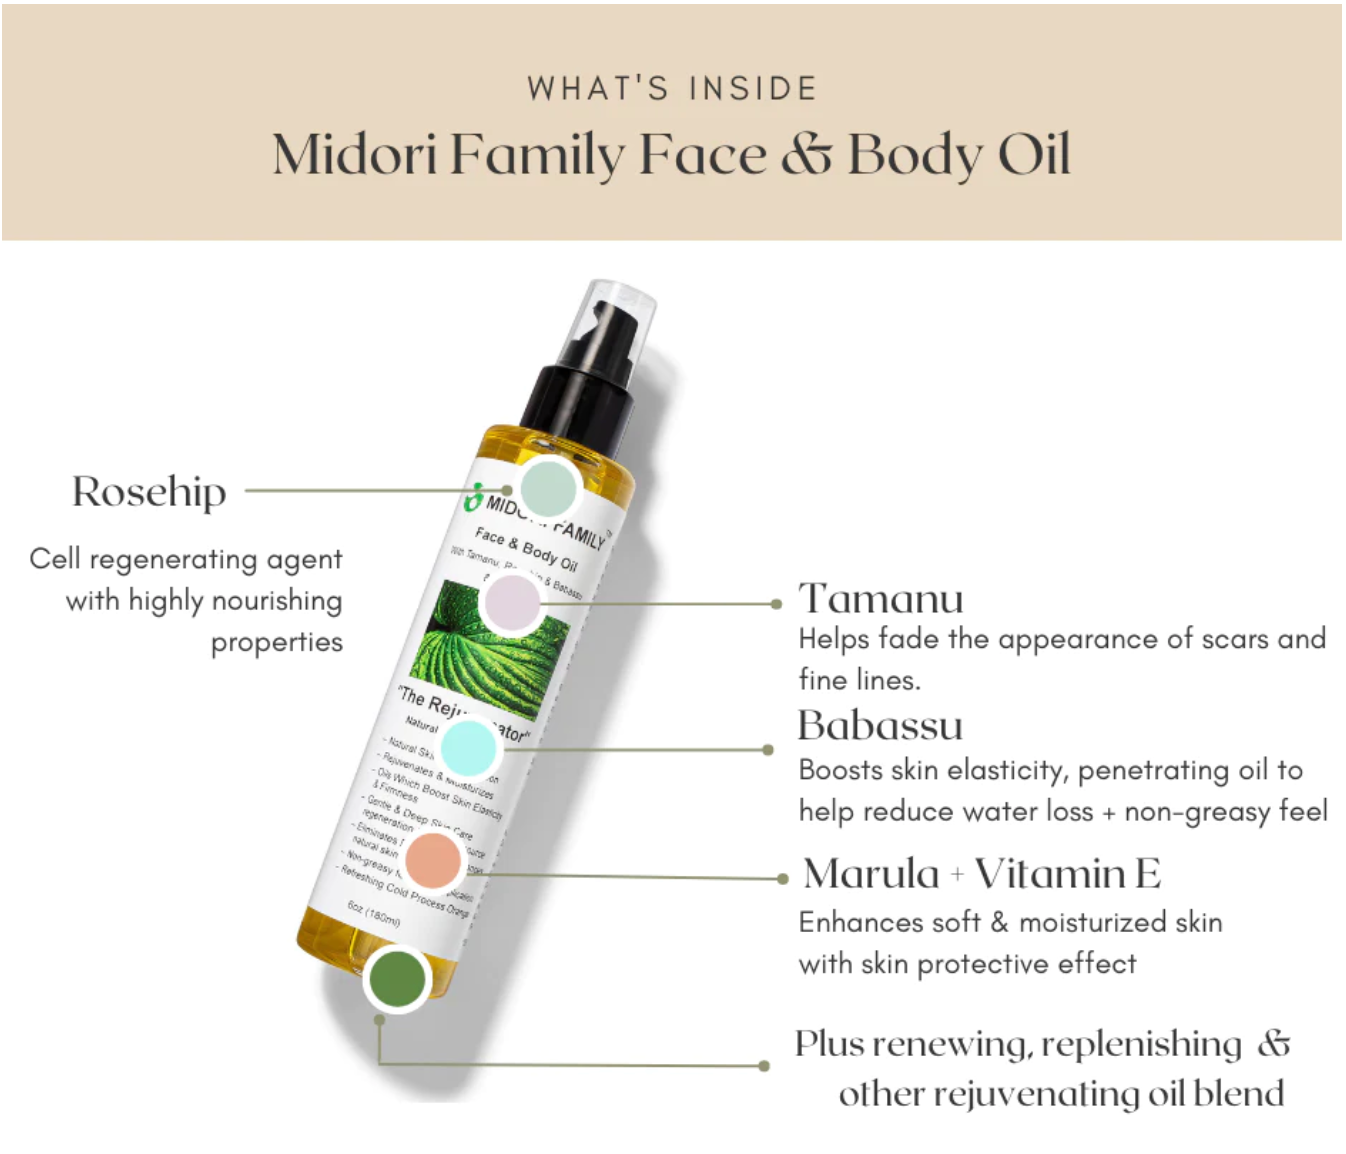 Midori Family Face and Body Oil